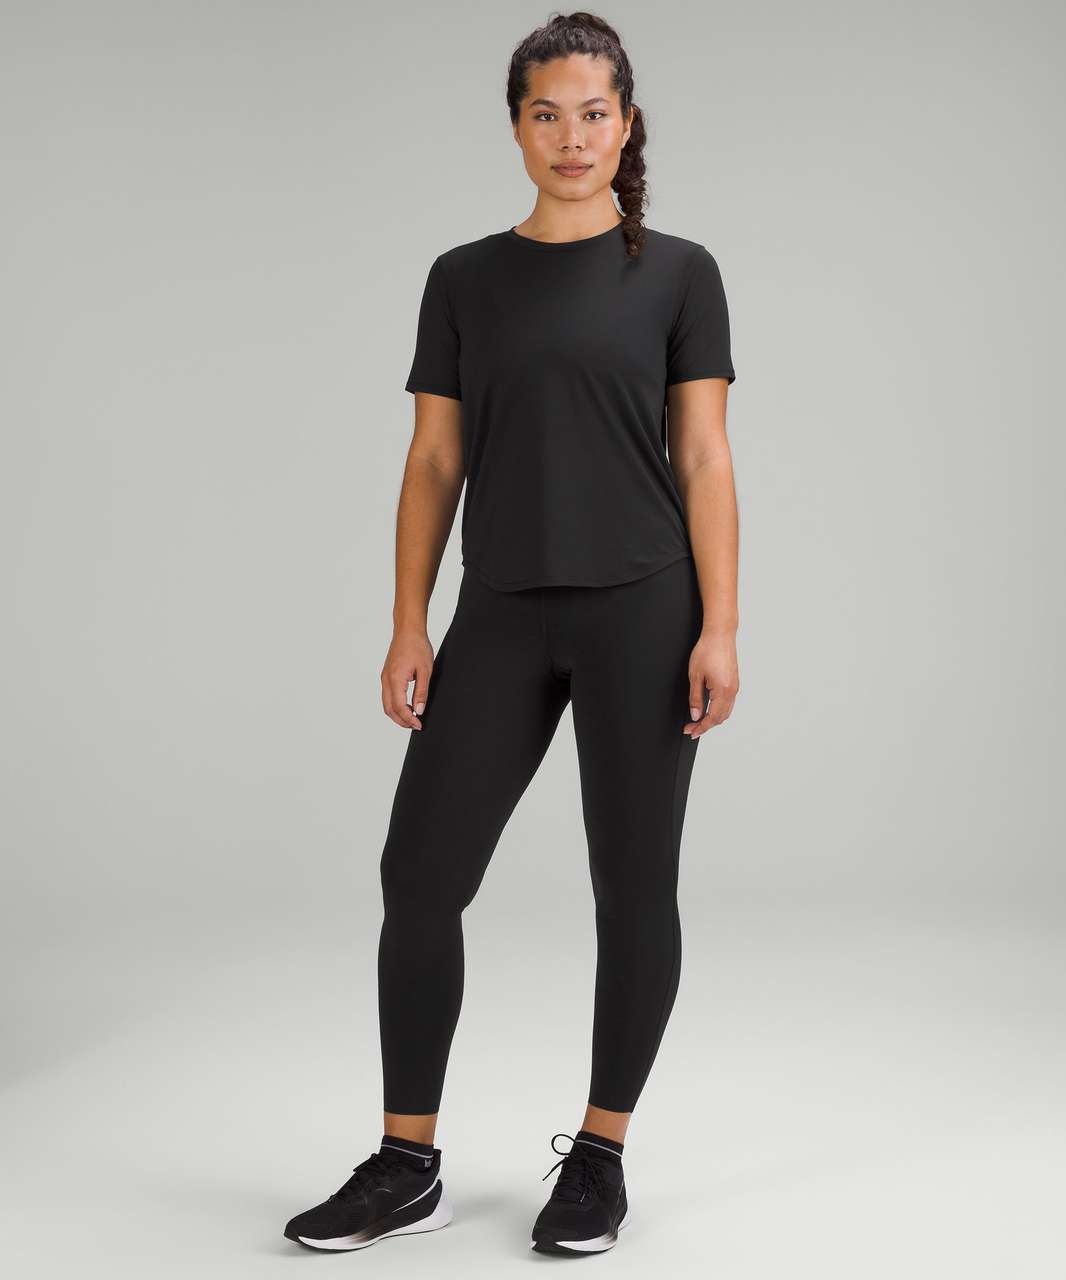 Lululemon High-Neck Running and Training T-Shirt - Black